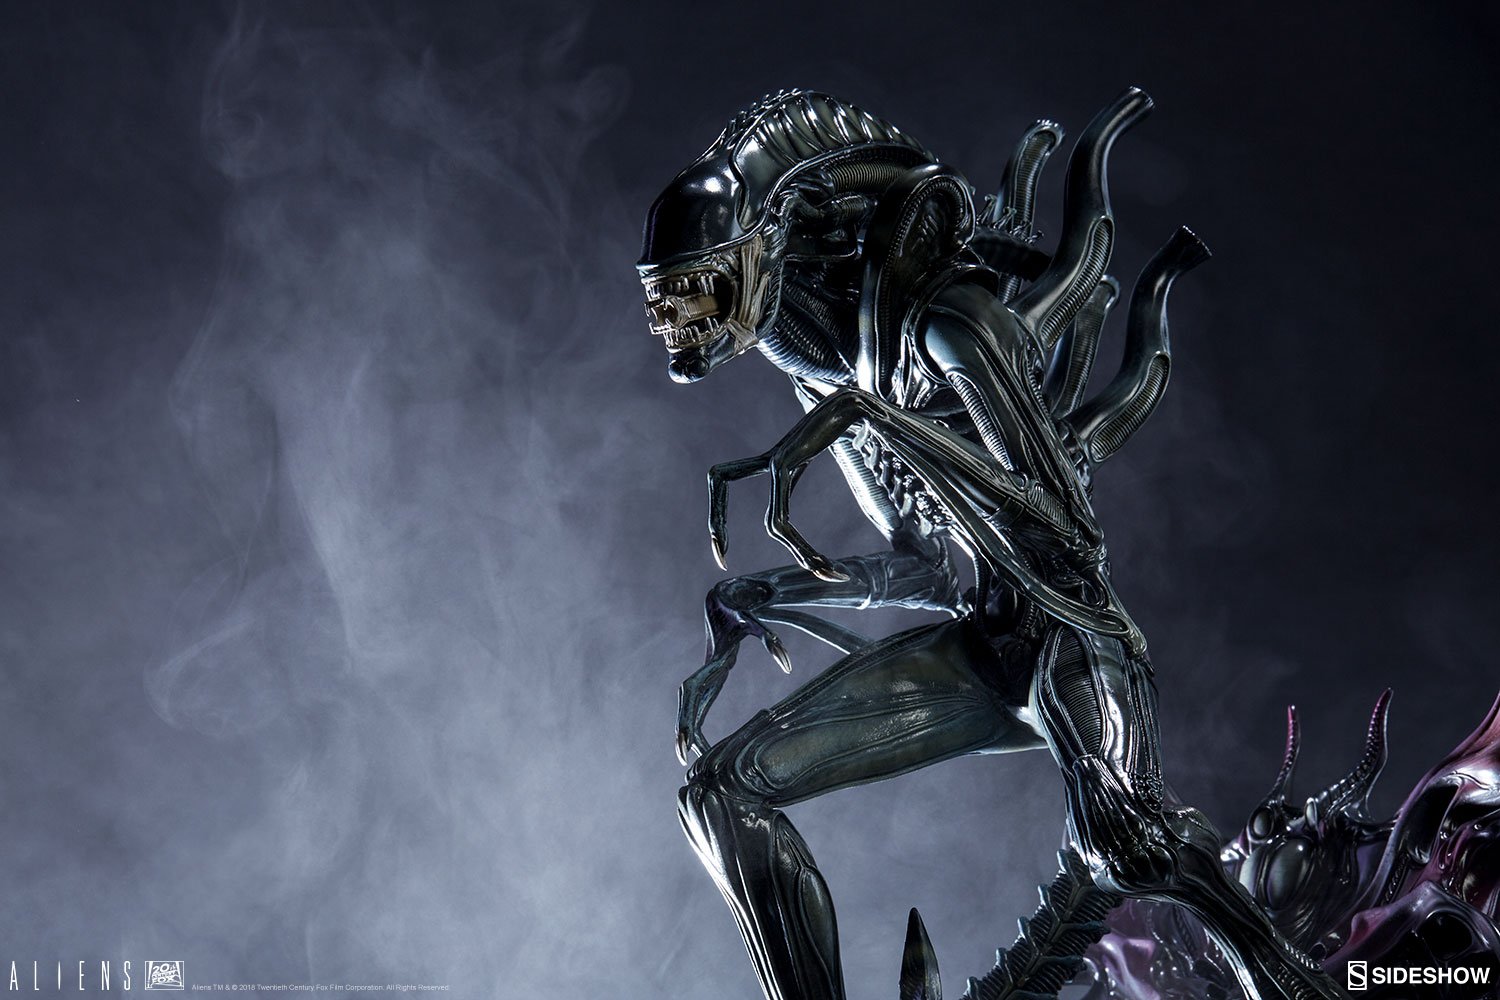 Aliens Alien Warrior Statue by Sideshow Collectibles | Sideshow Collectibles